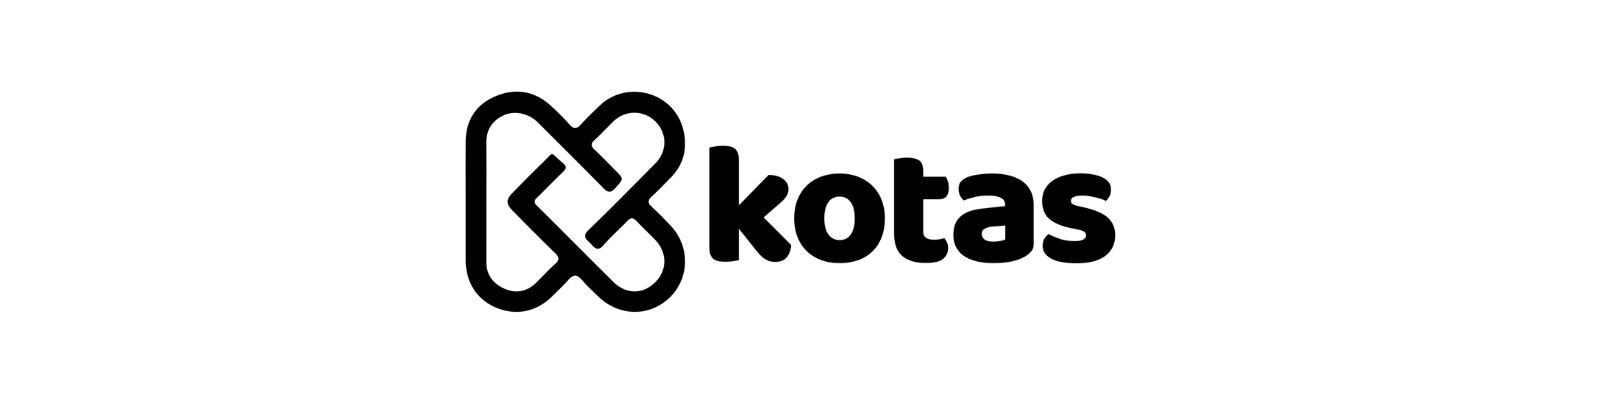 WhatsApp Kotas: Conheça todos os Canais de Atendimento!